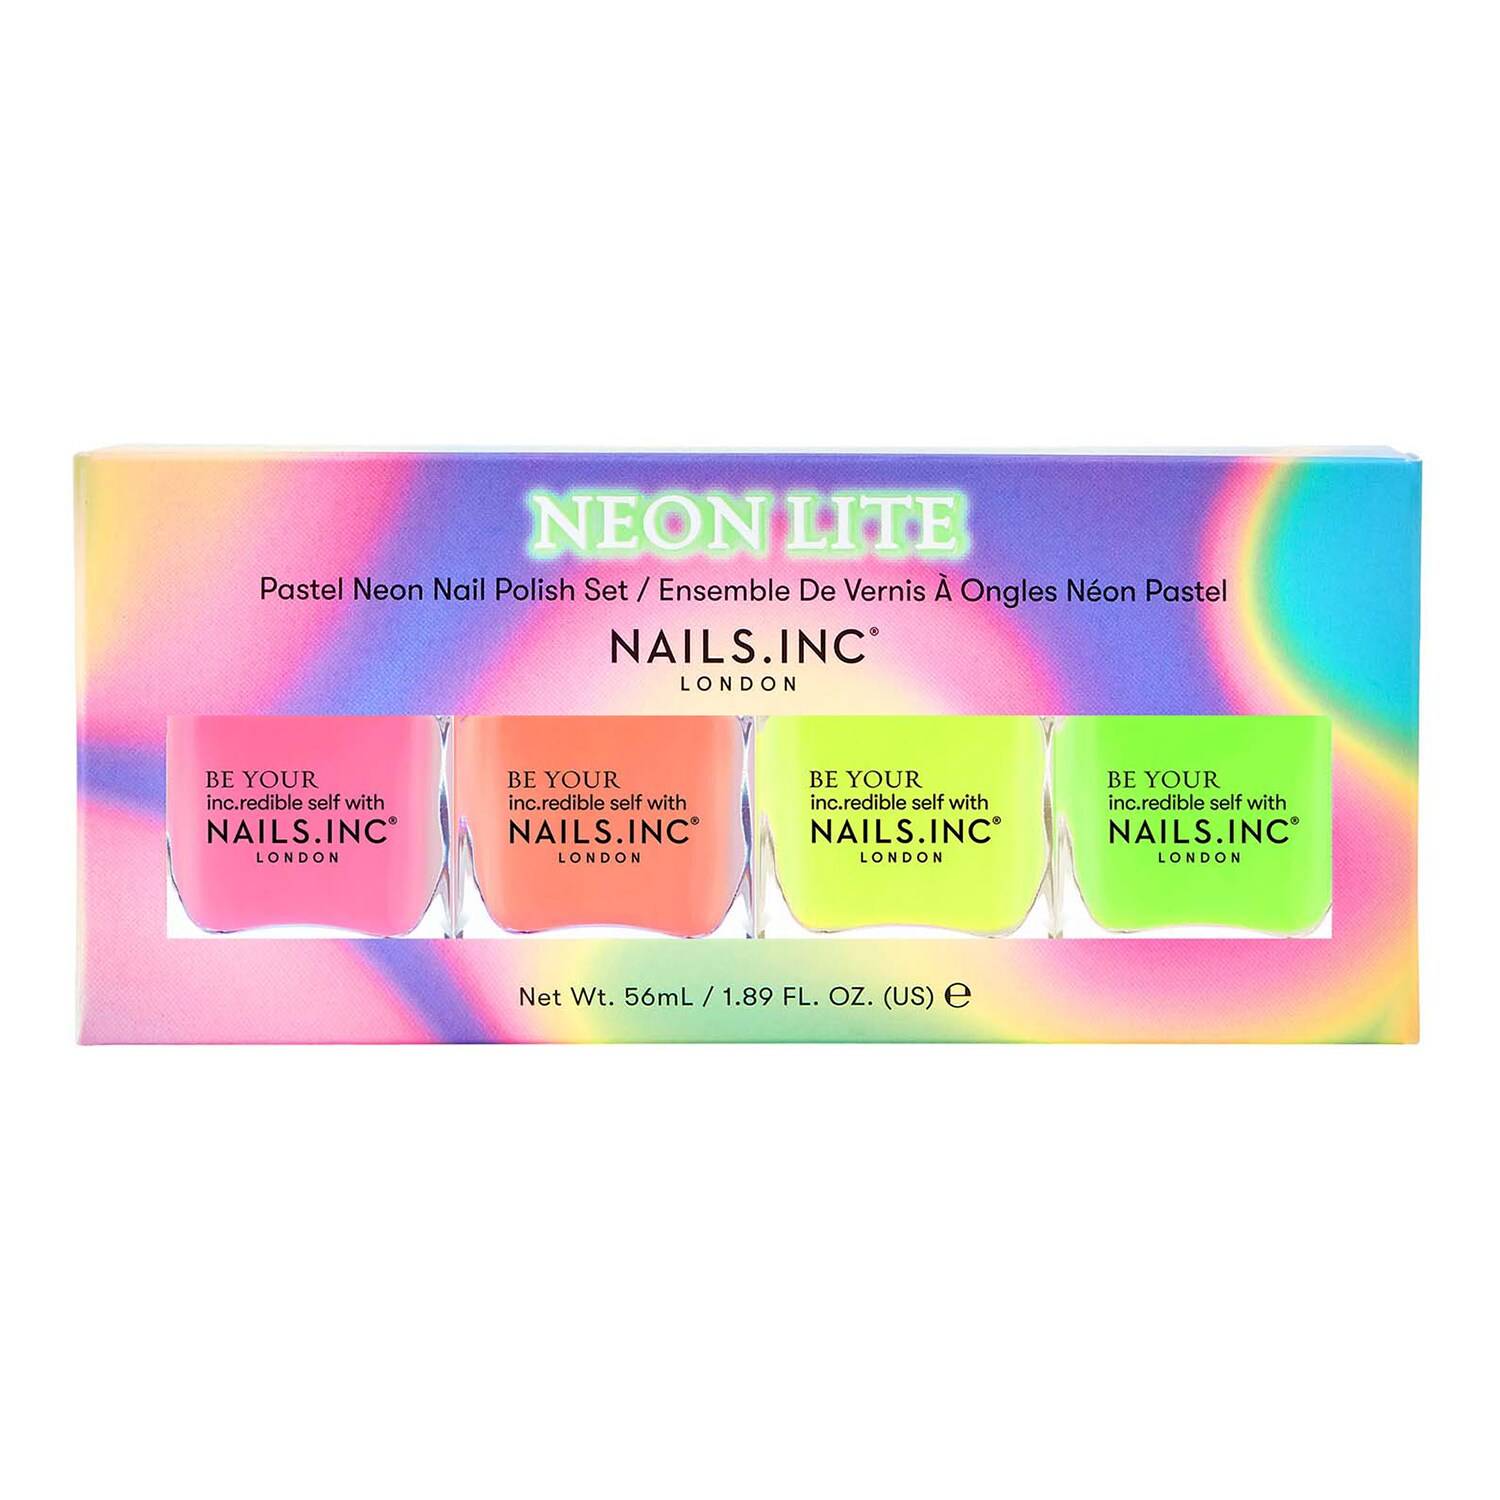 Nails Inc Neon Lite Pastel Neon Nail Polish Set